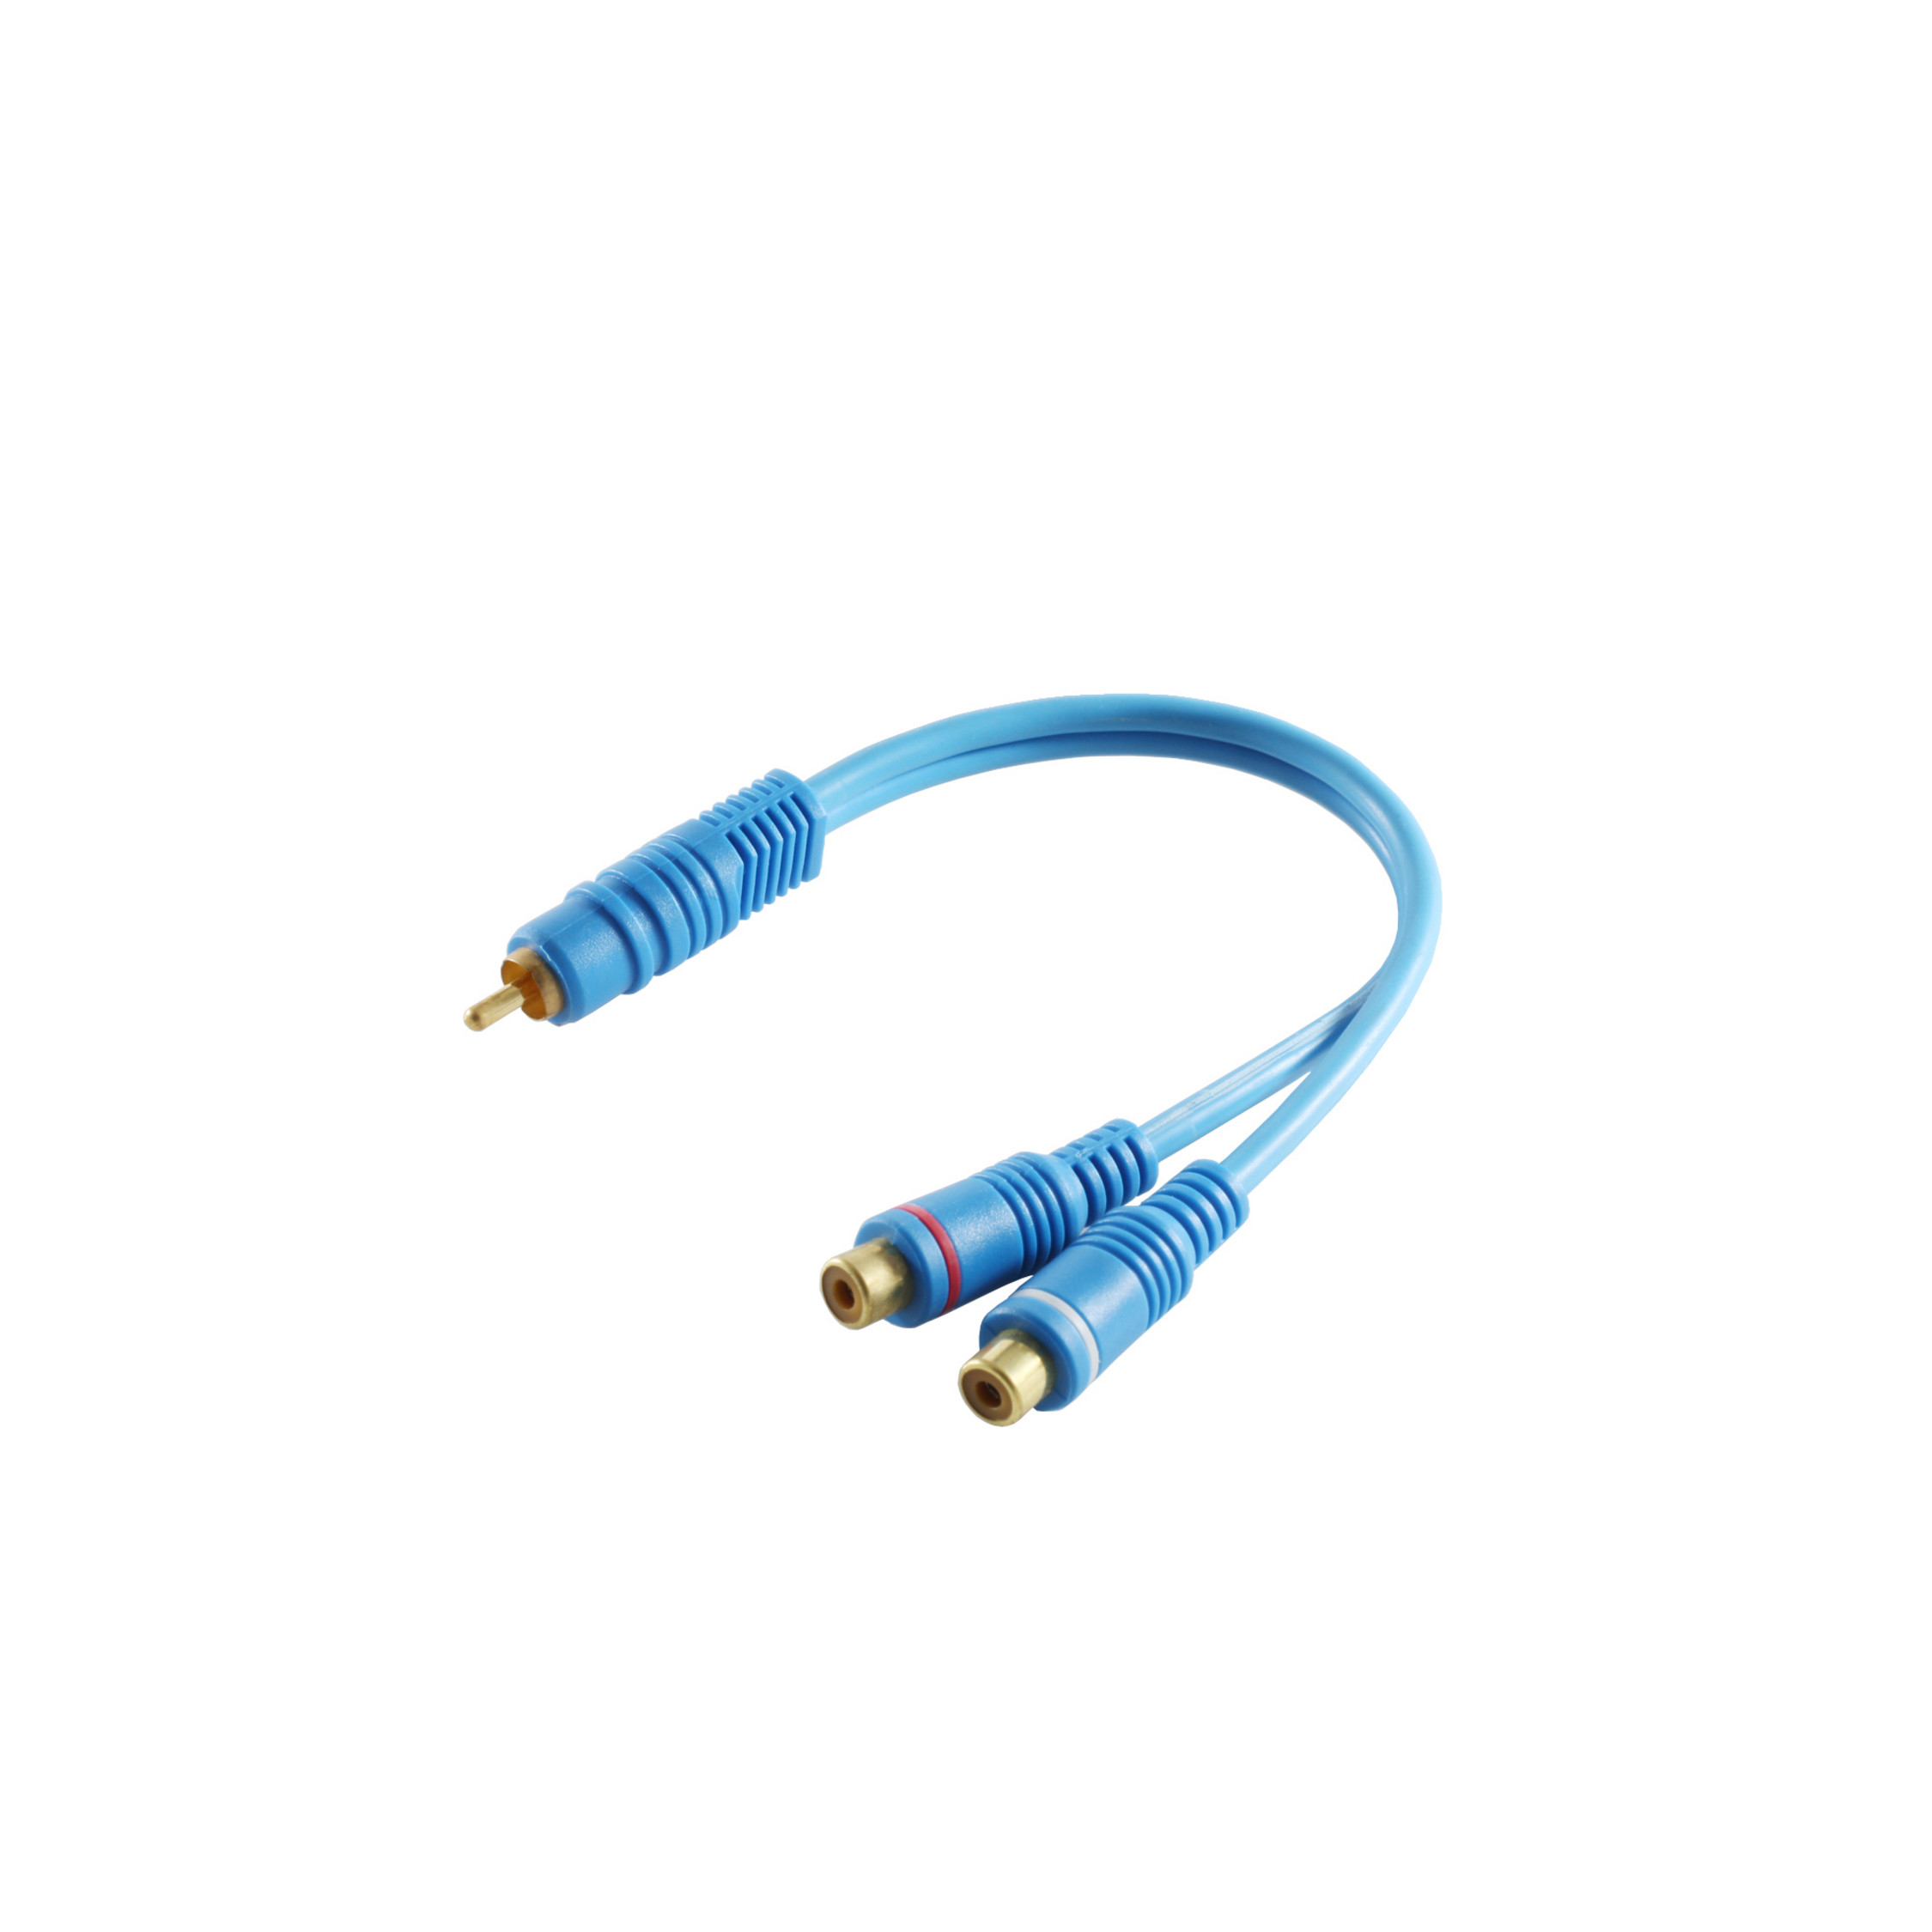 CONNECTIVITY Audio/Video 2 blau, MAXIMUM Cinchkupplung, 0,2m Kabel S/CONN Cinchstecker/